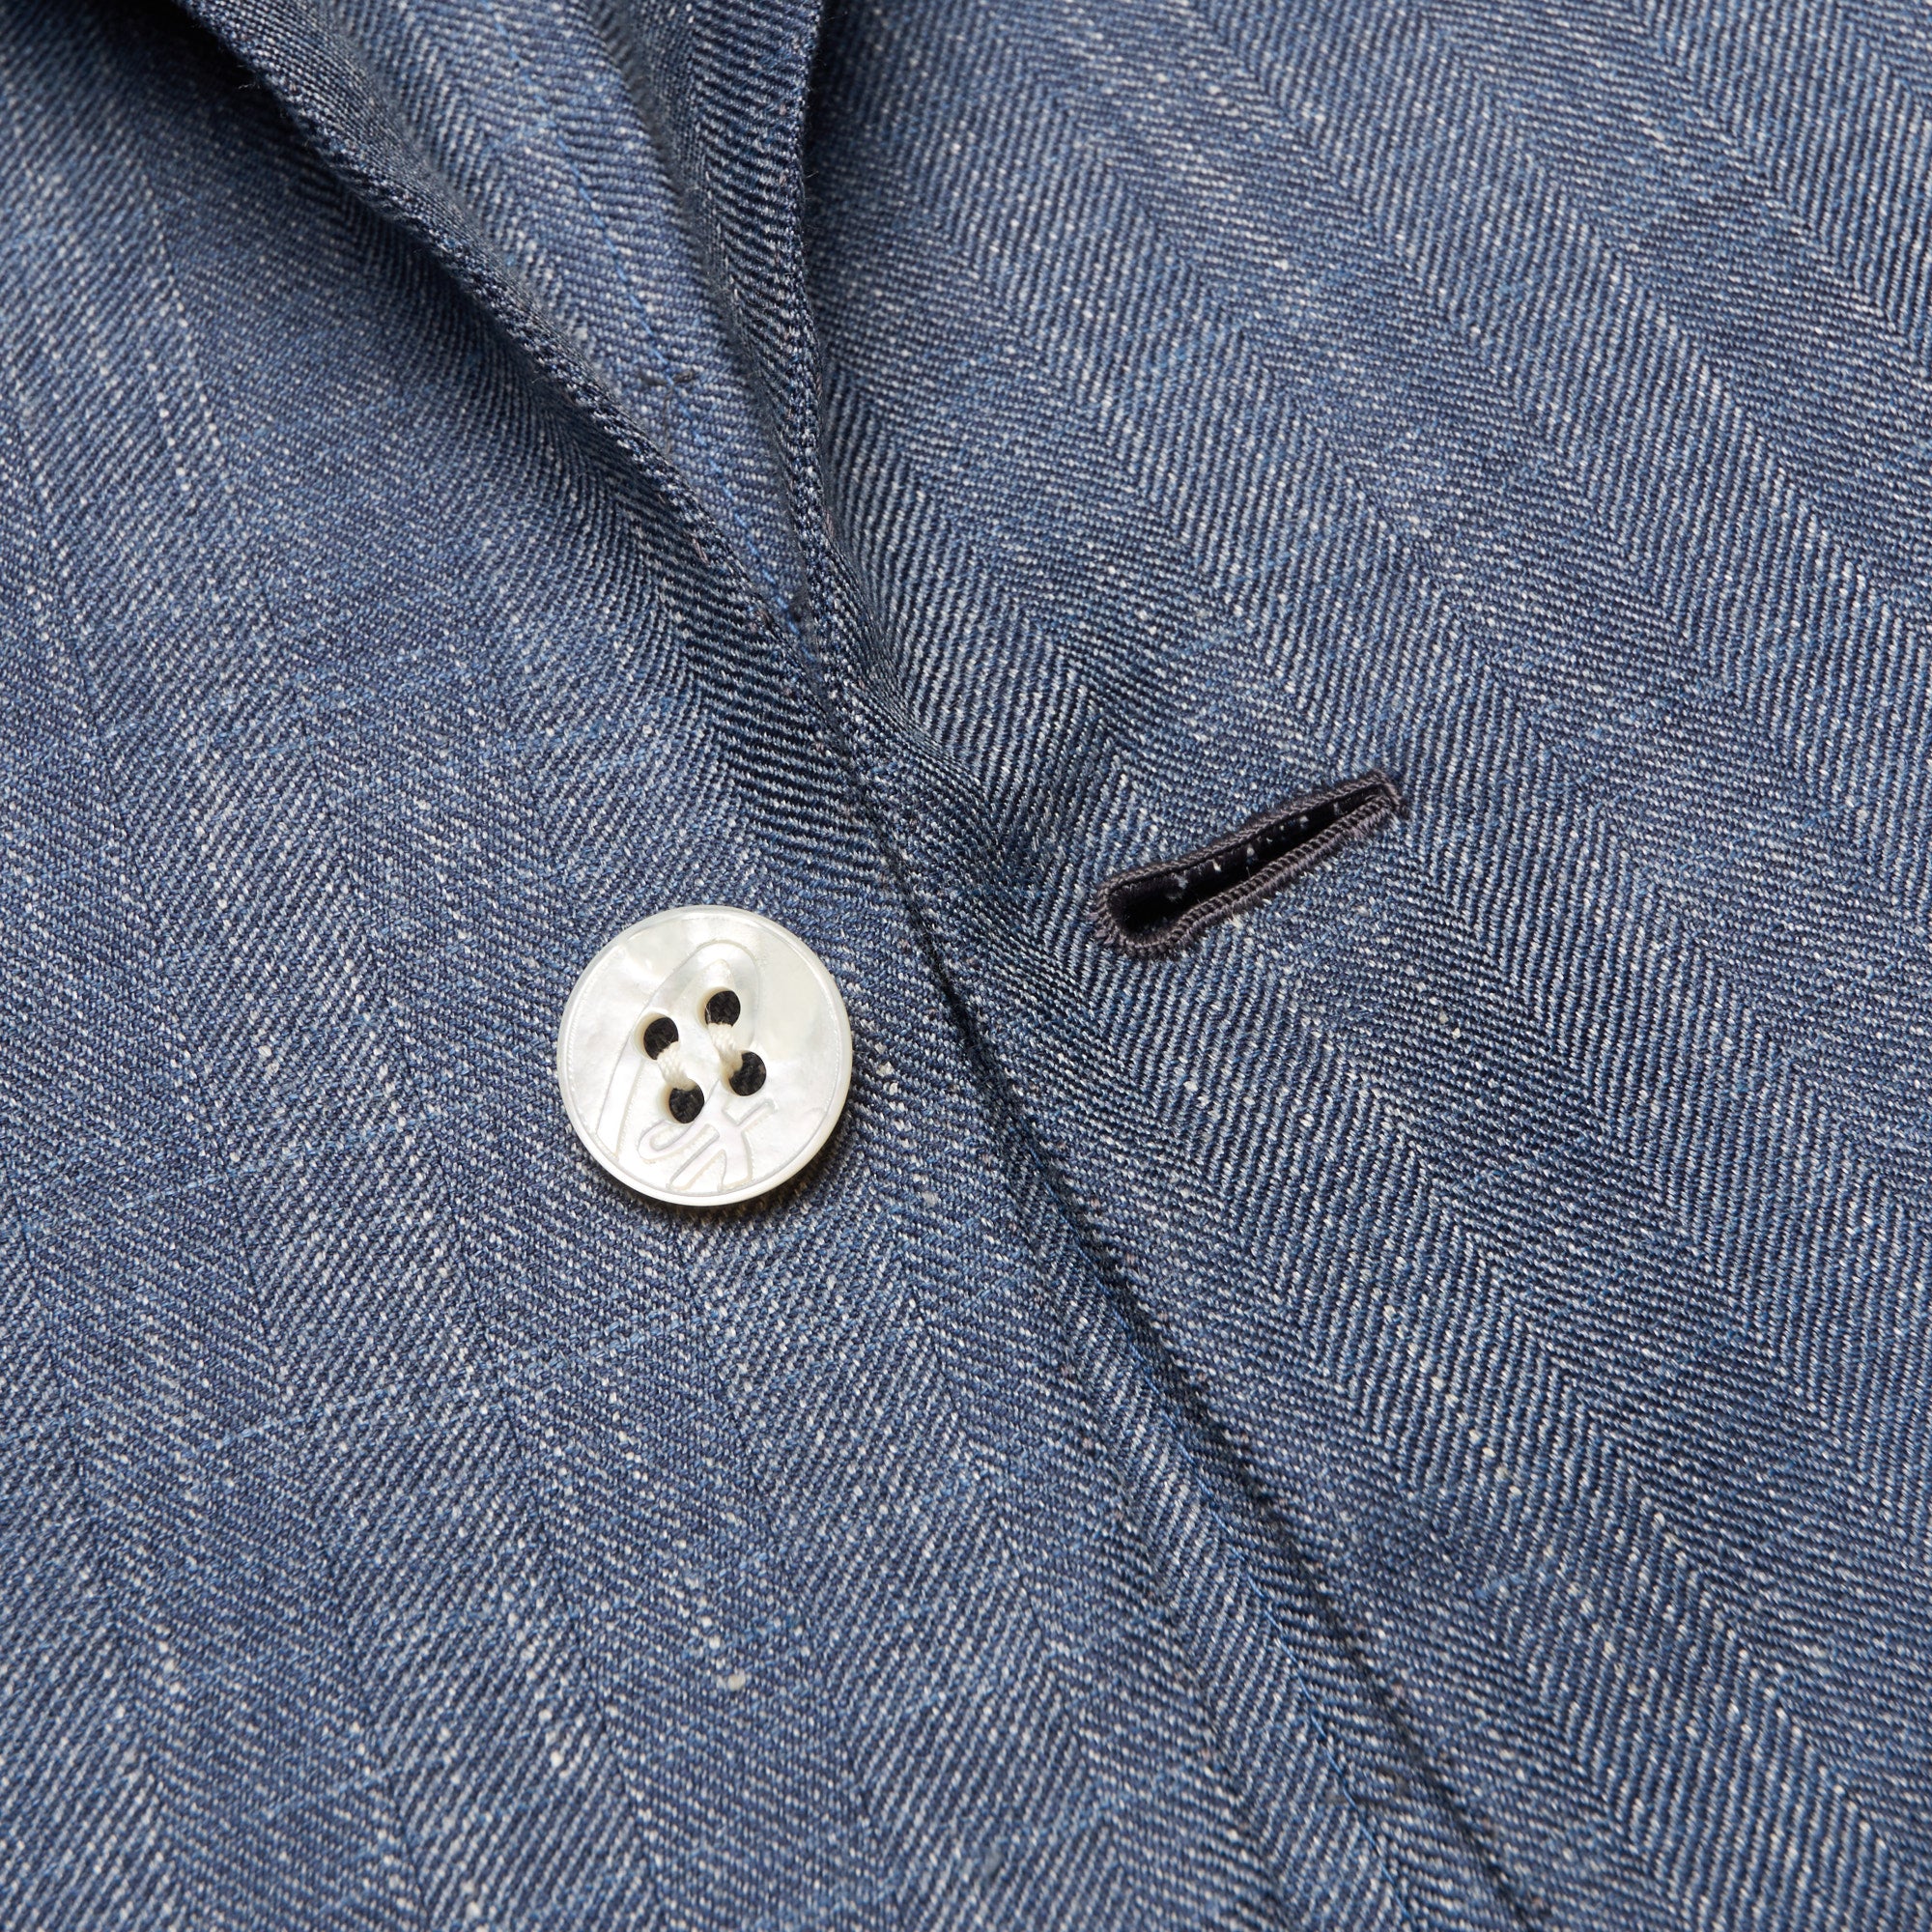 BRIONI "COLOSSEO" Handmade Blue Herringbone Wool-Silk-Linen Jacket EU 50 NEW US 40 BRIONI